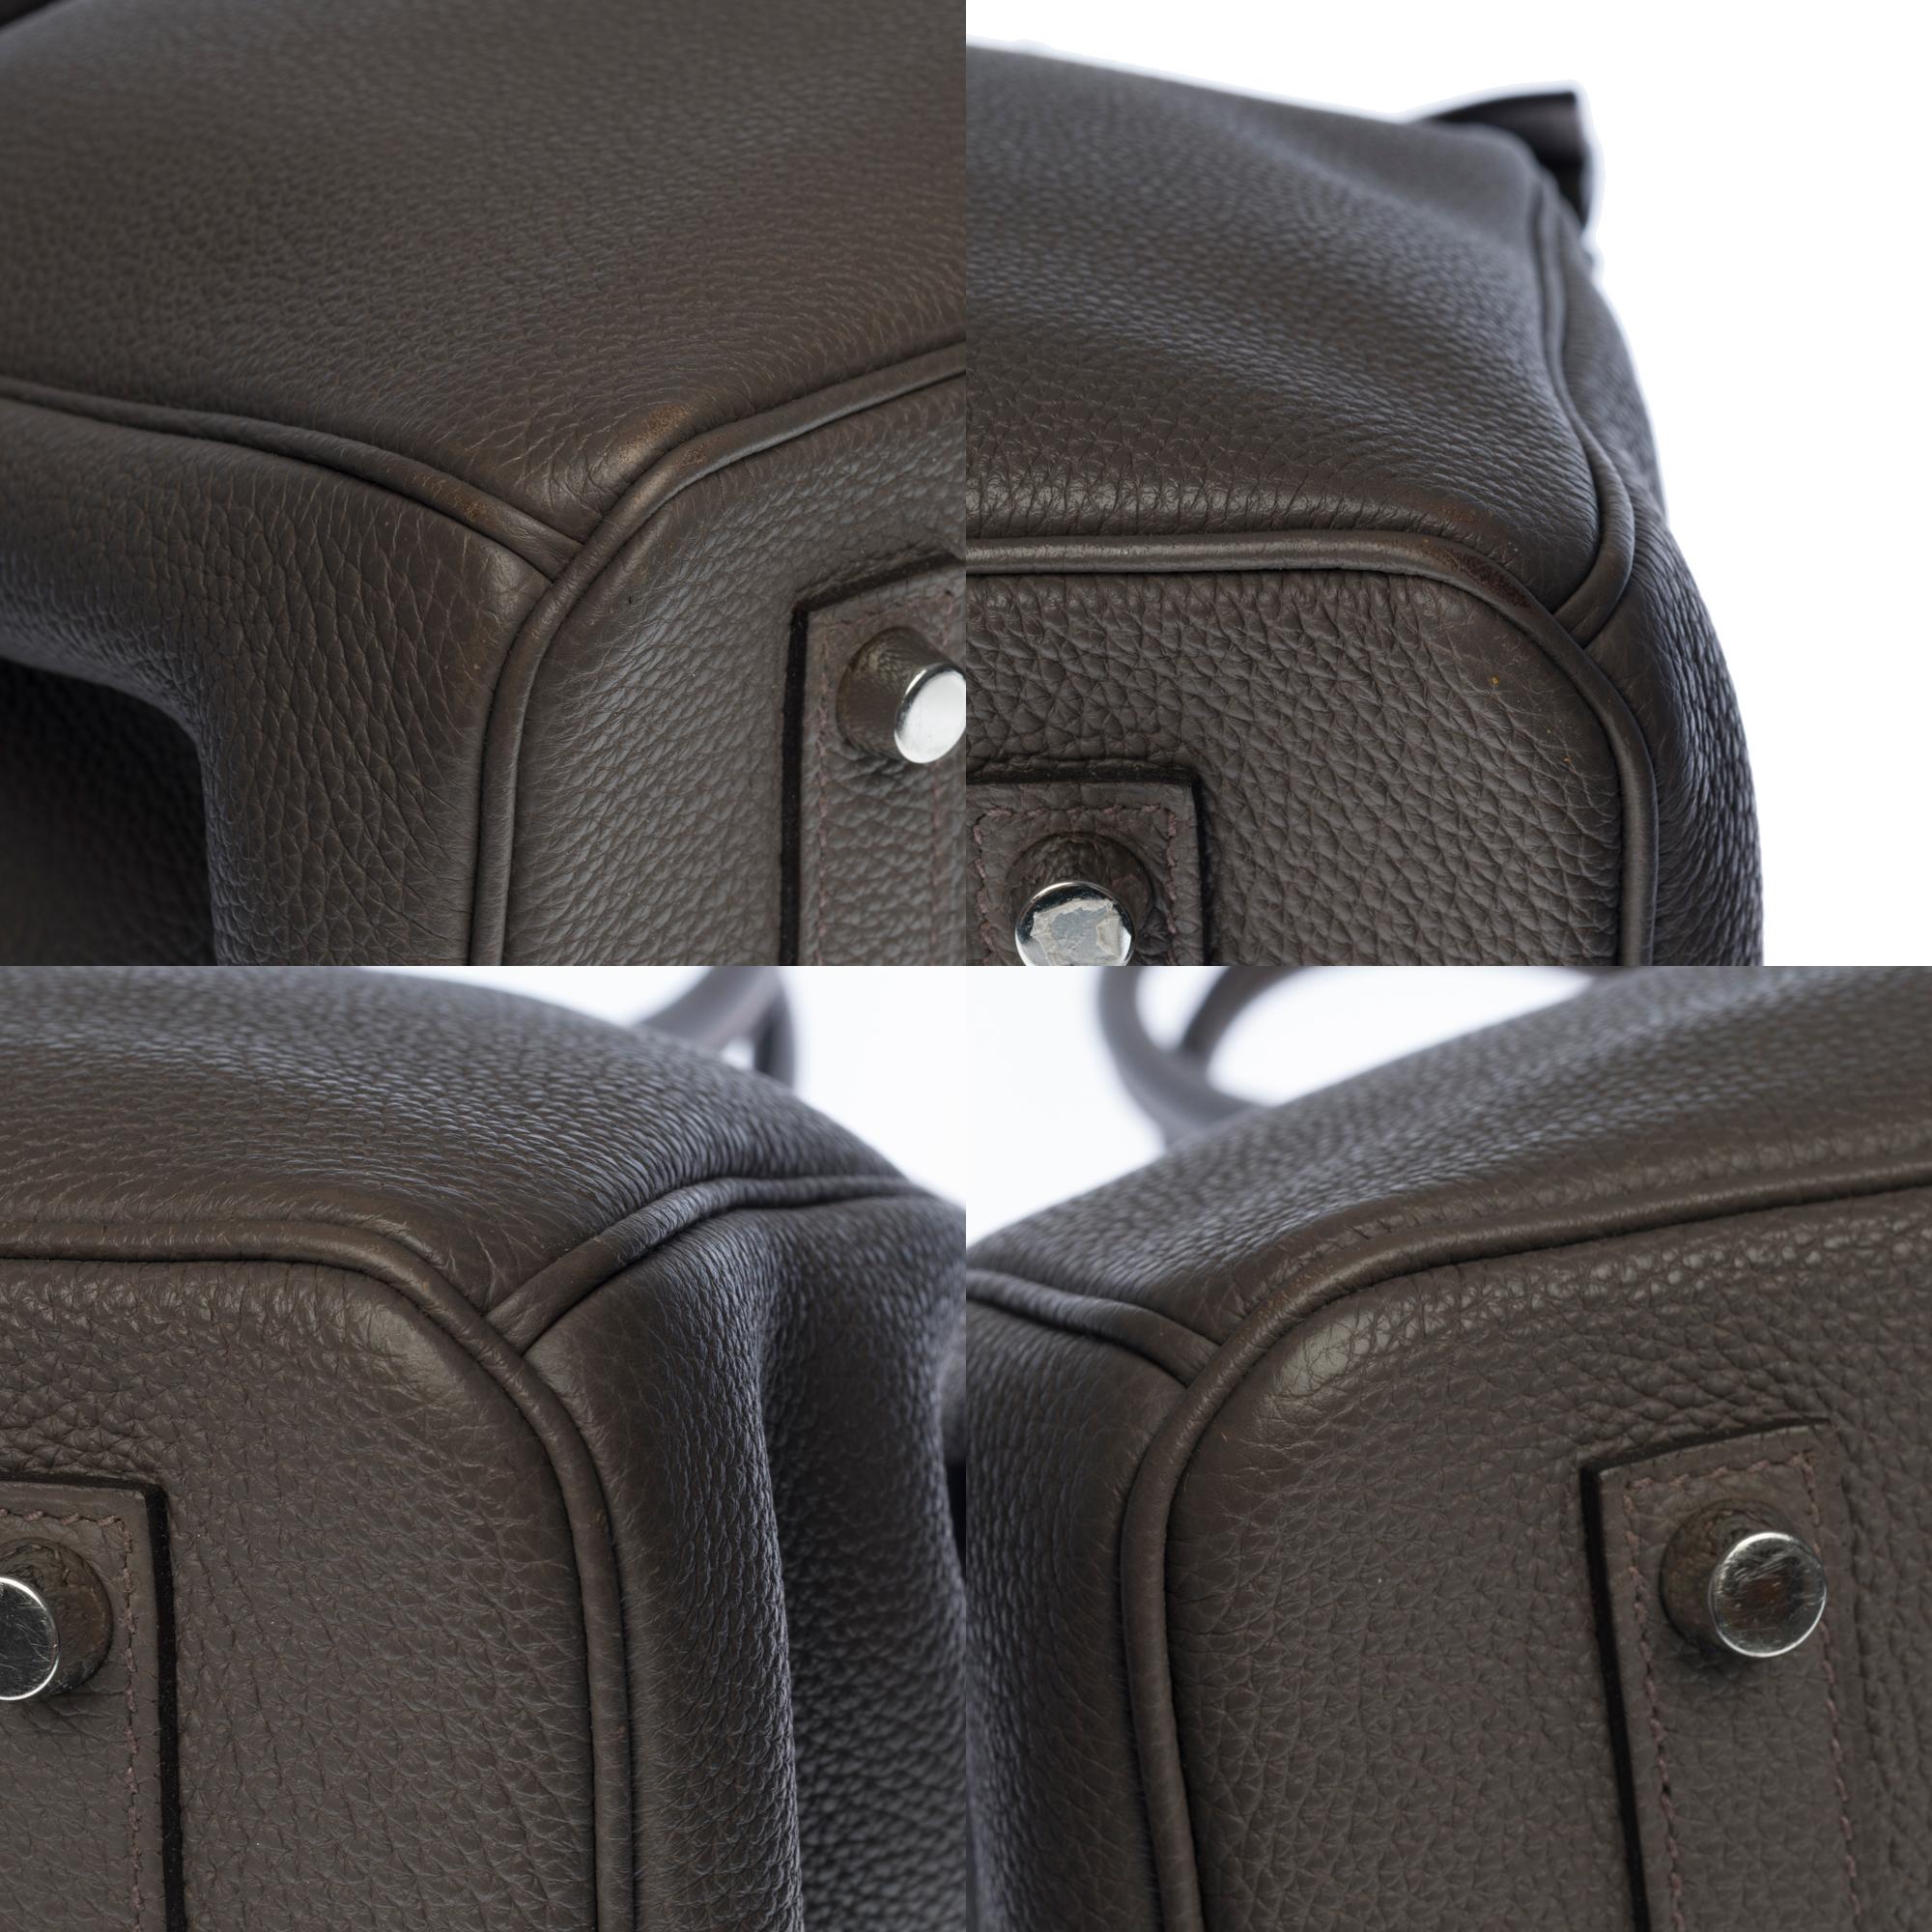 Almost New -Full set-Hermès Birkin 35 handbag in Etain Togo leather, SHW 5